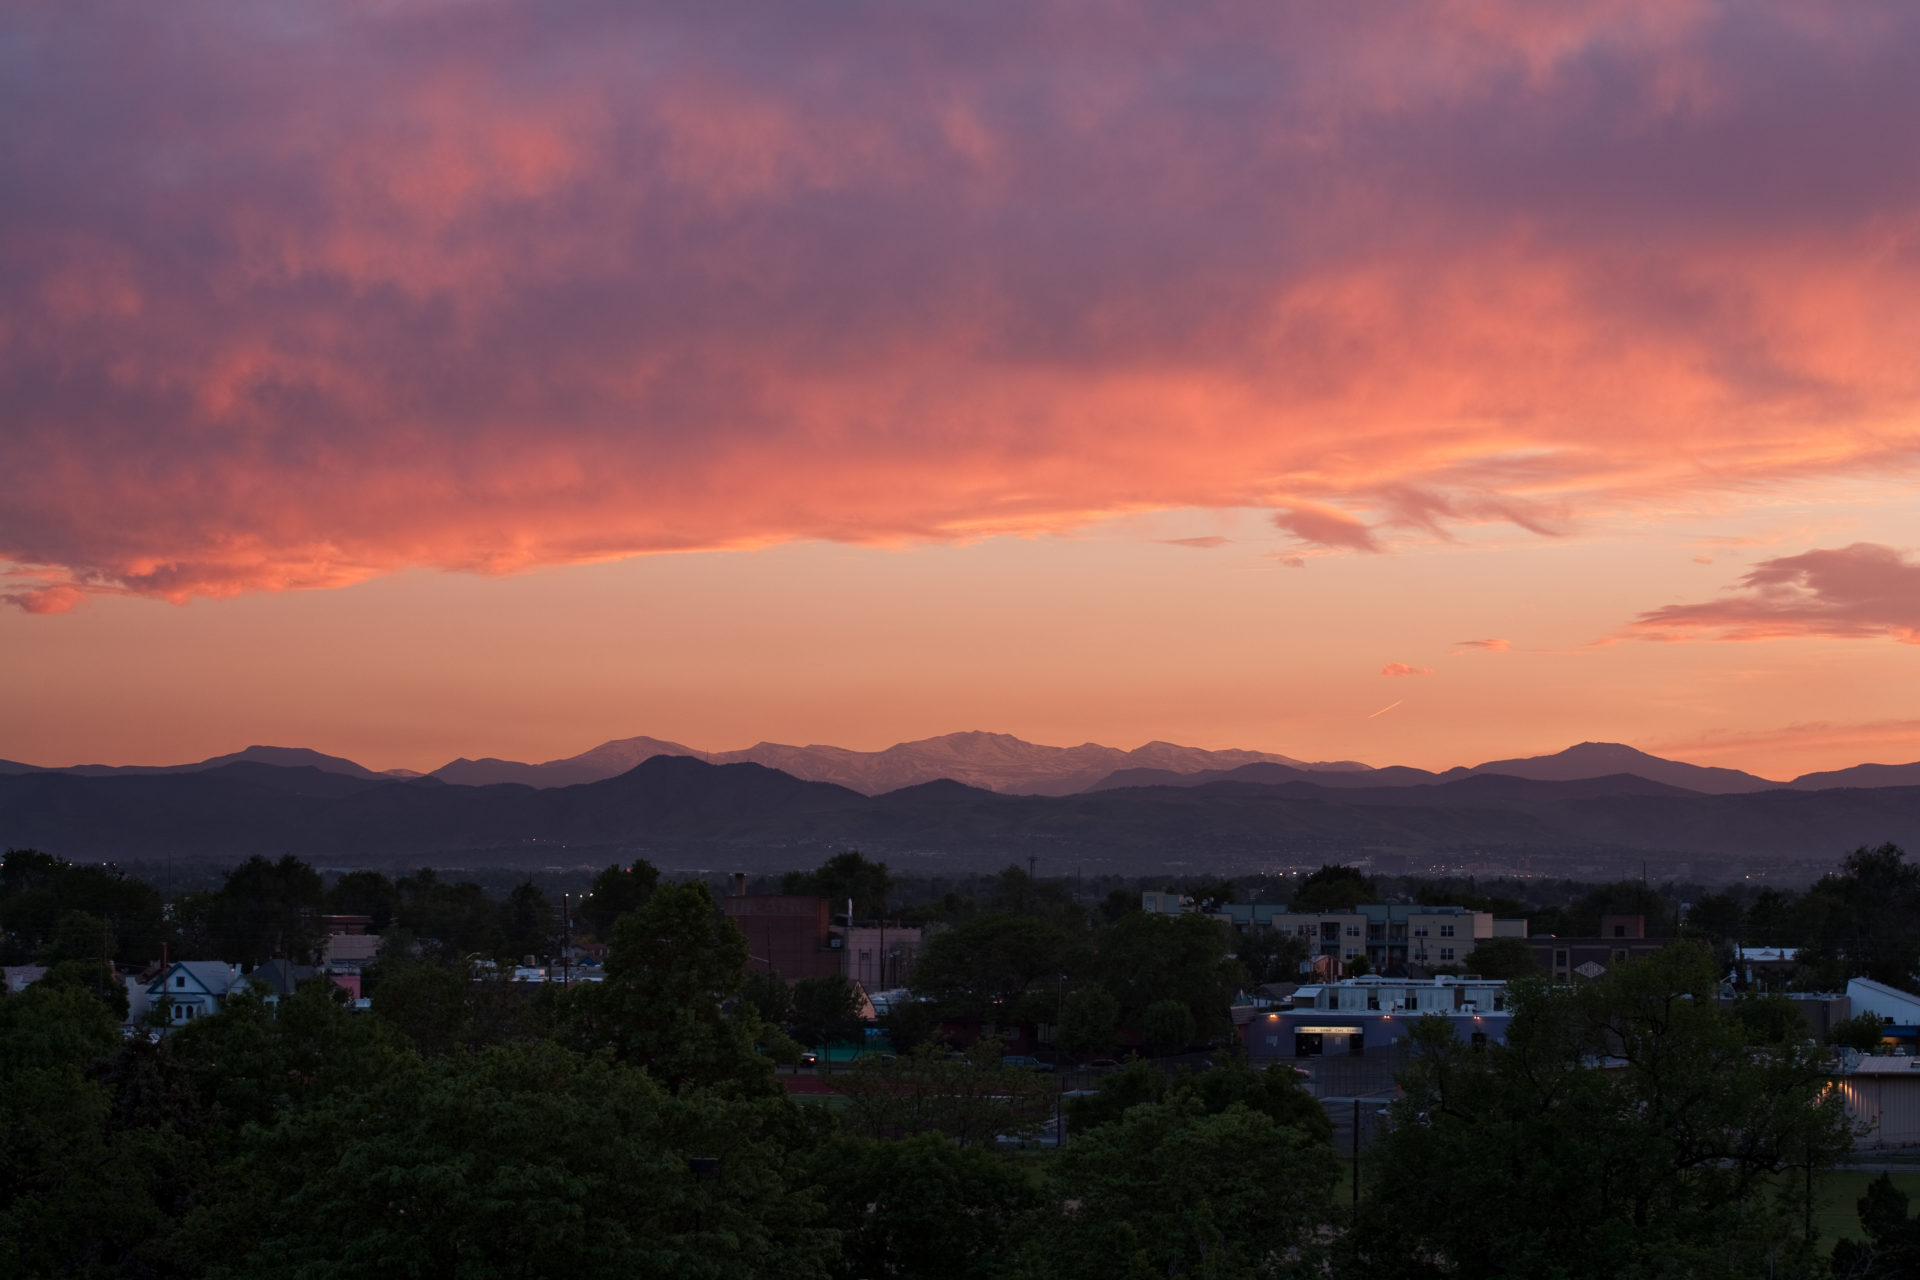 Mount Evans sunset - June 3, 2011